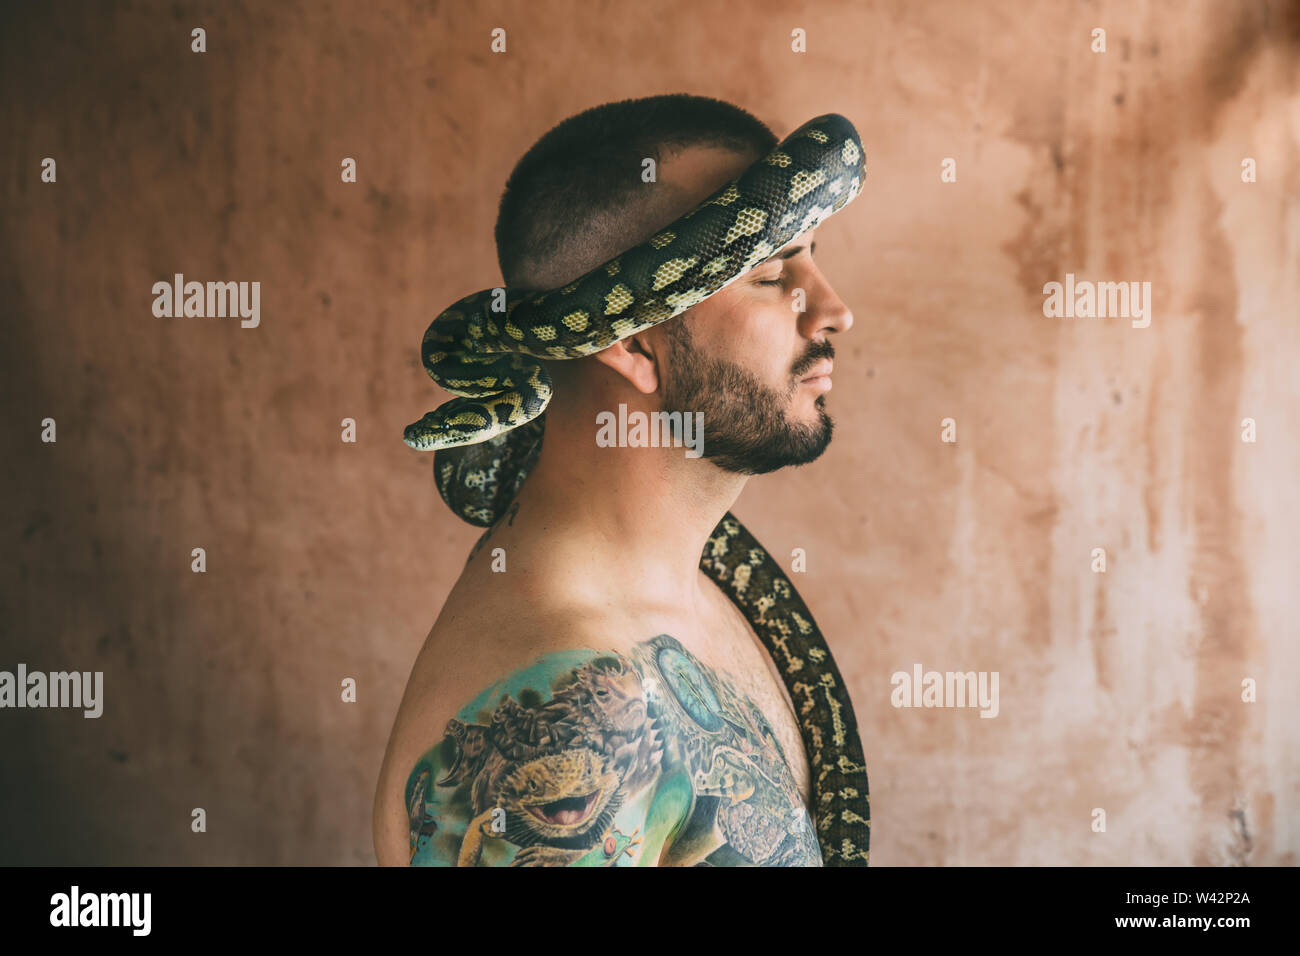 snake surrounding man's head Stock Photo